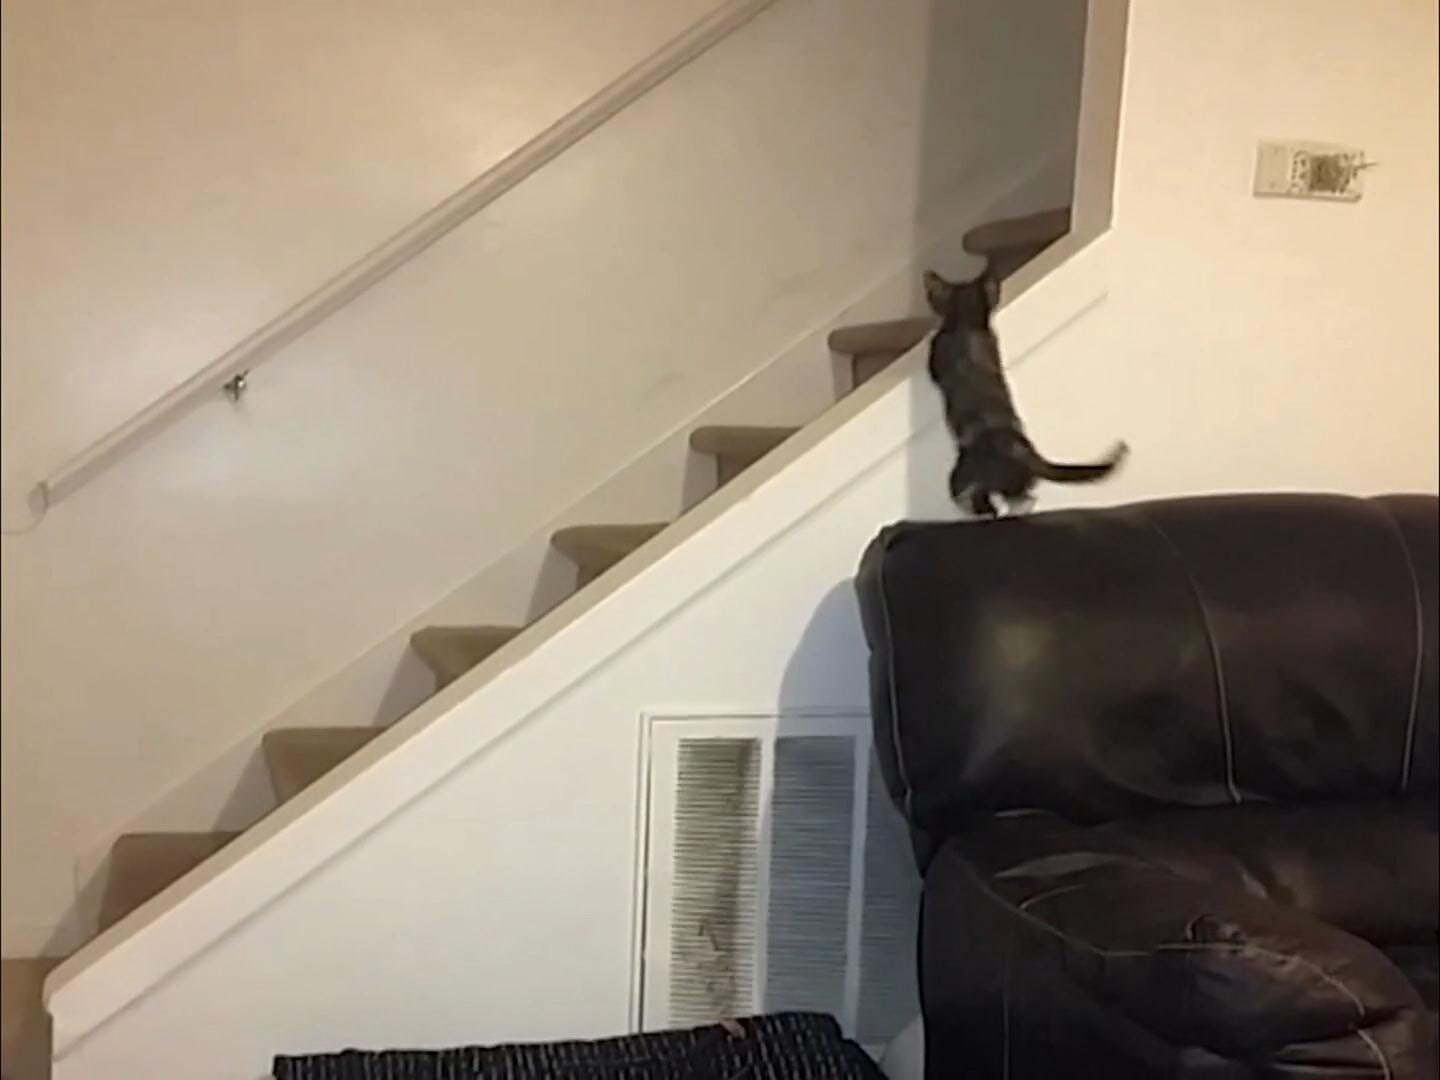 кот падает с дивана